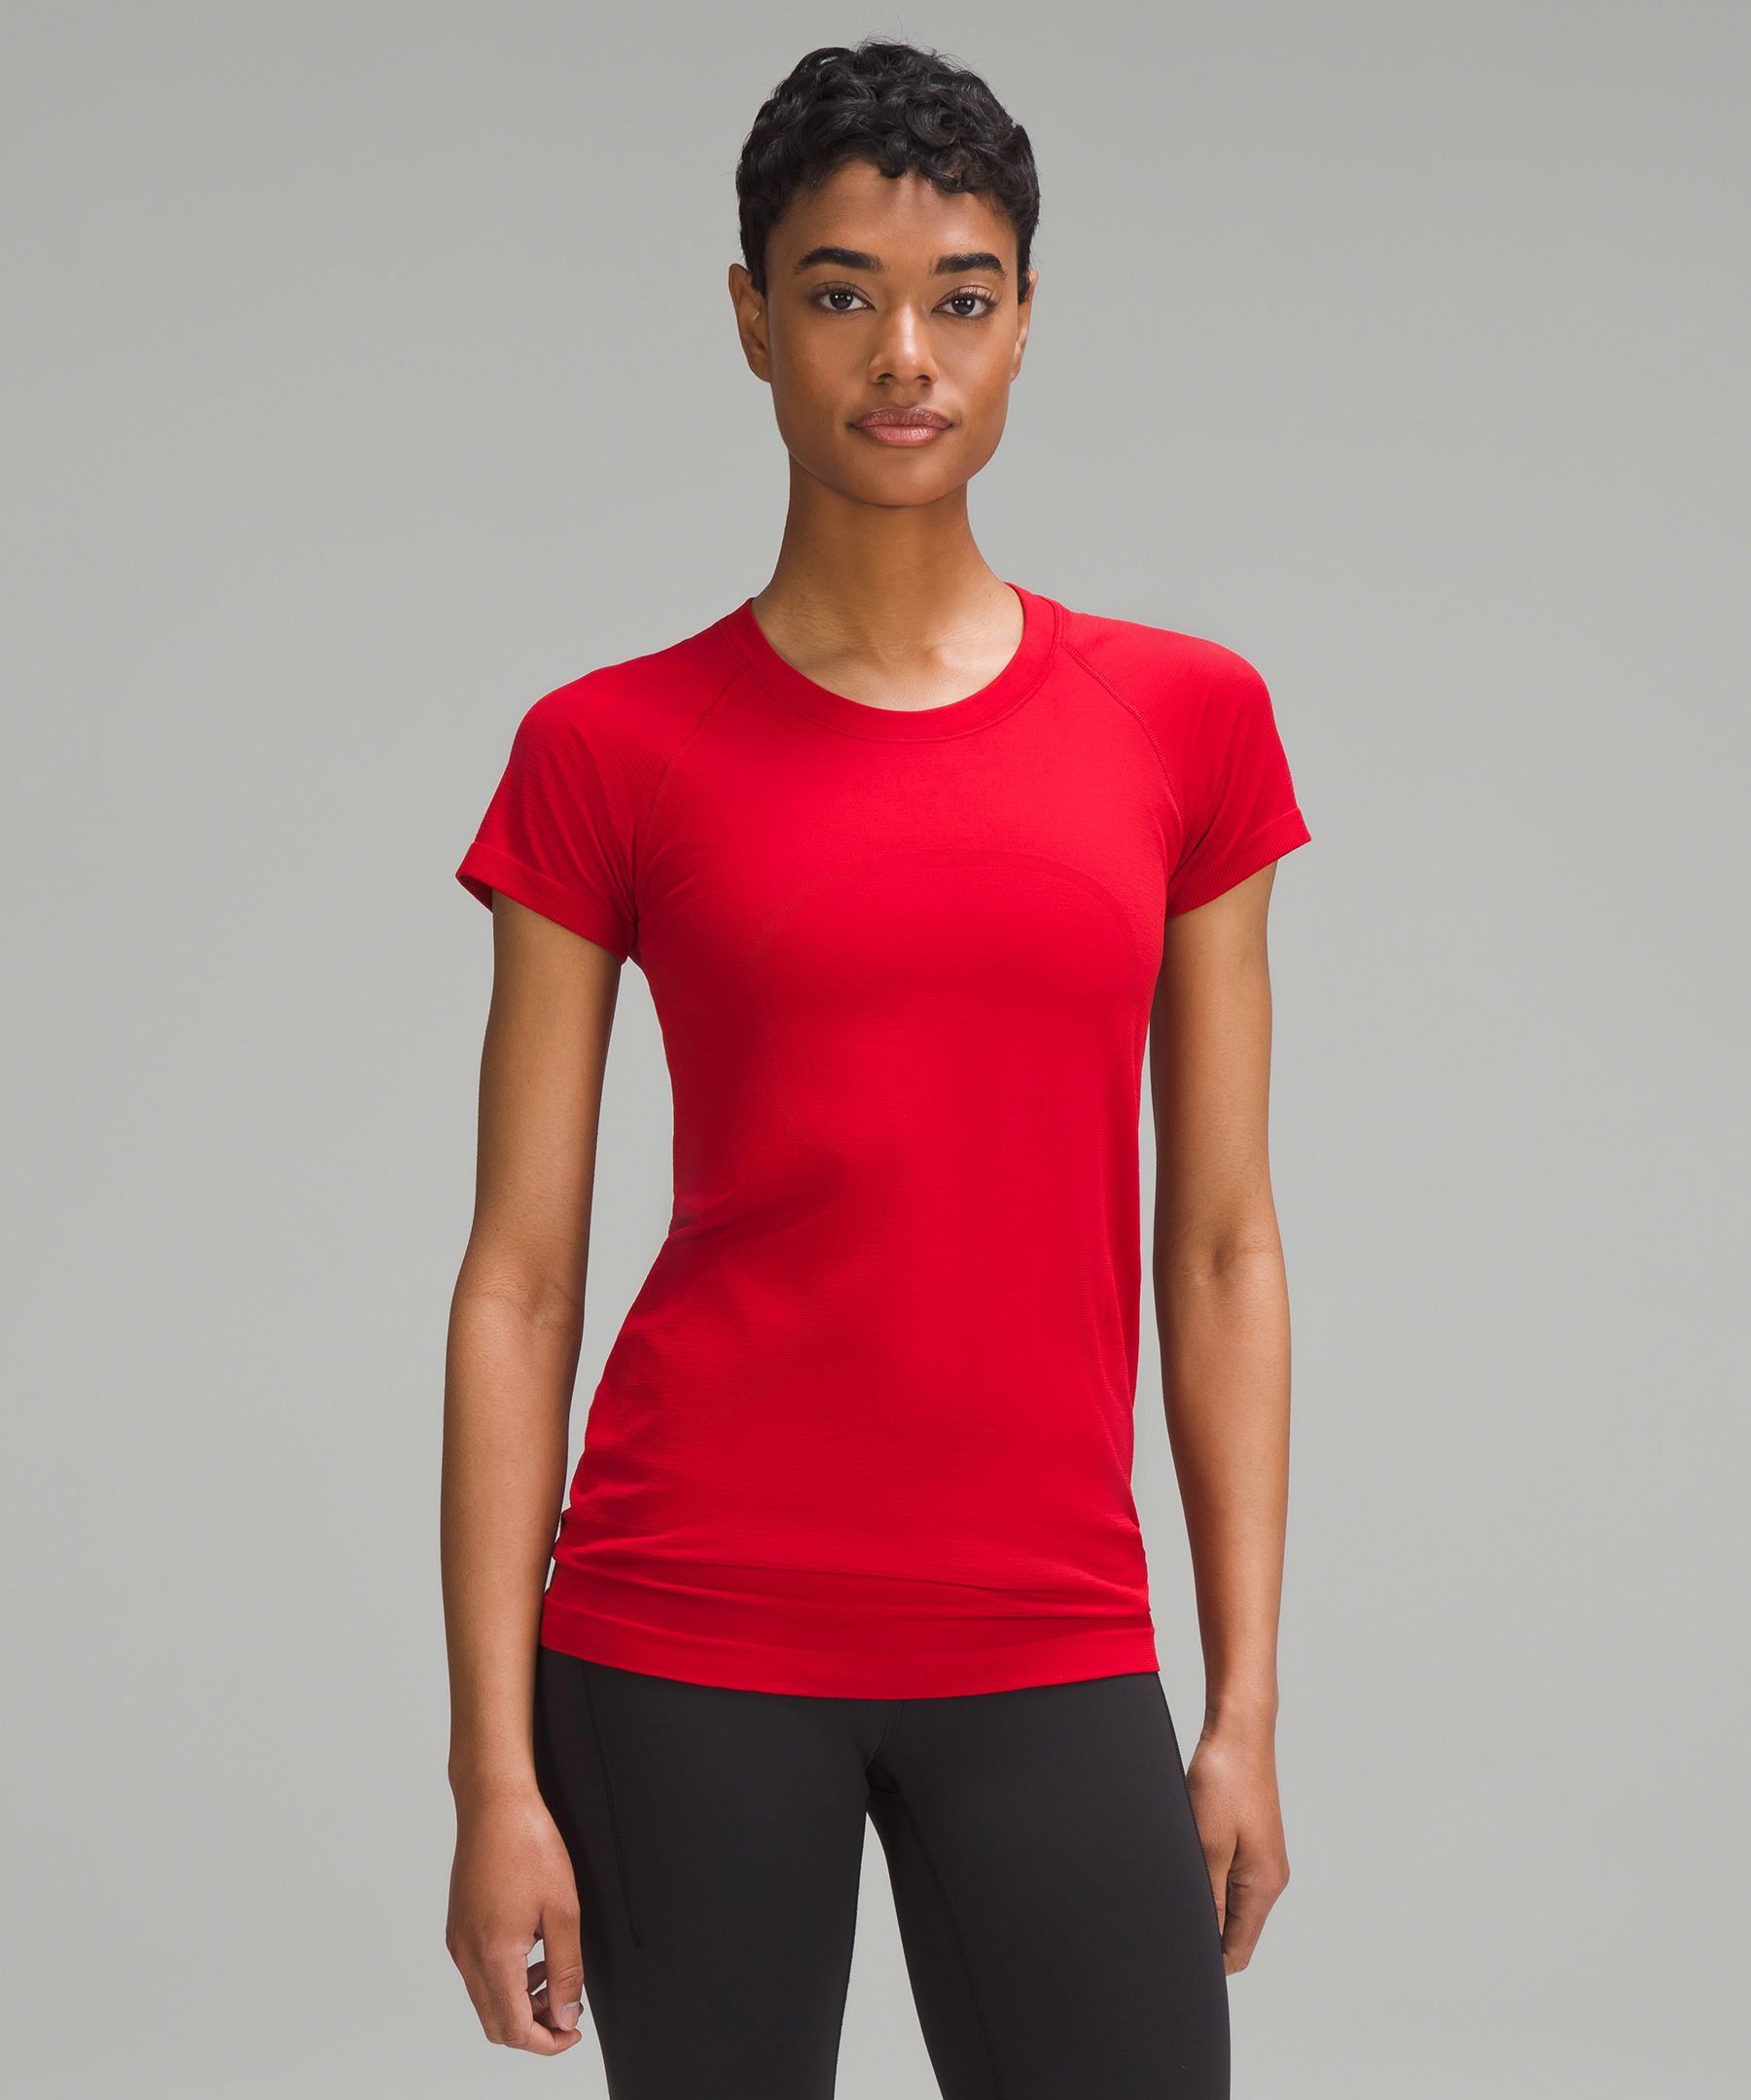 Lululemon Swiftly Tech Short Sleeve Shirt 2.0 In Neon